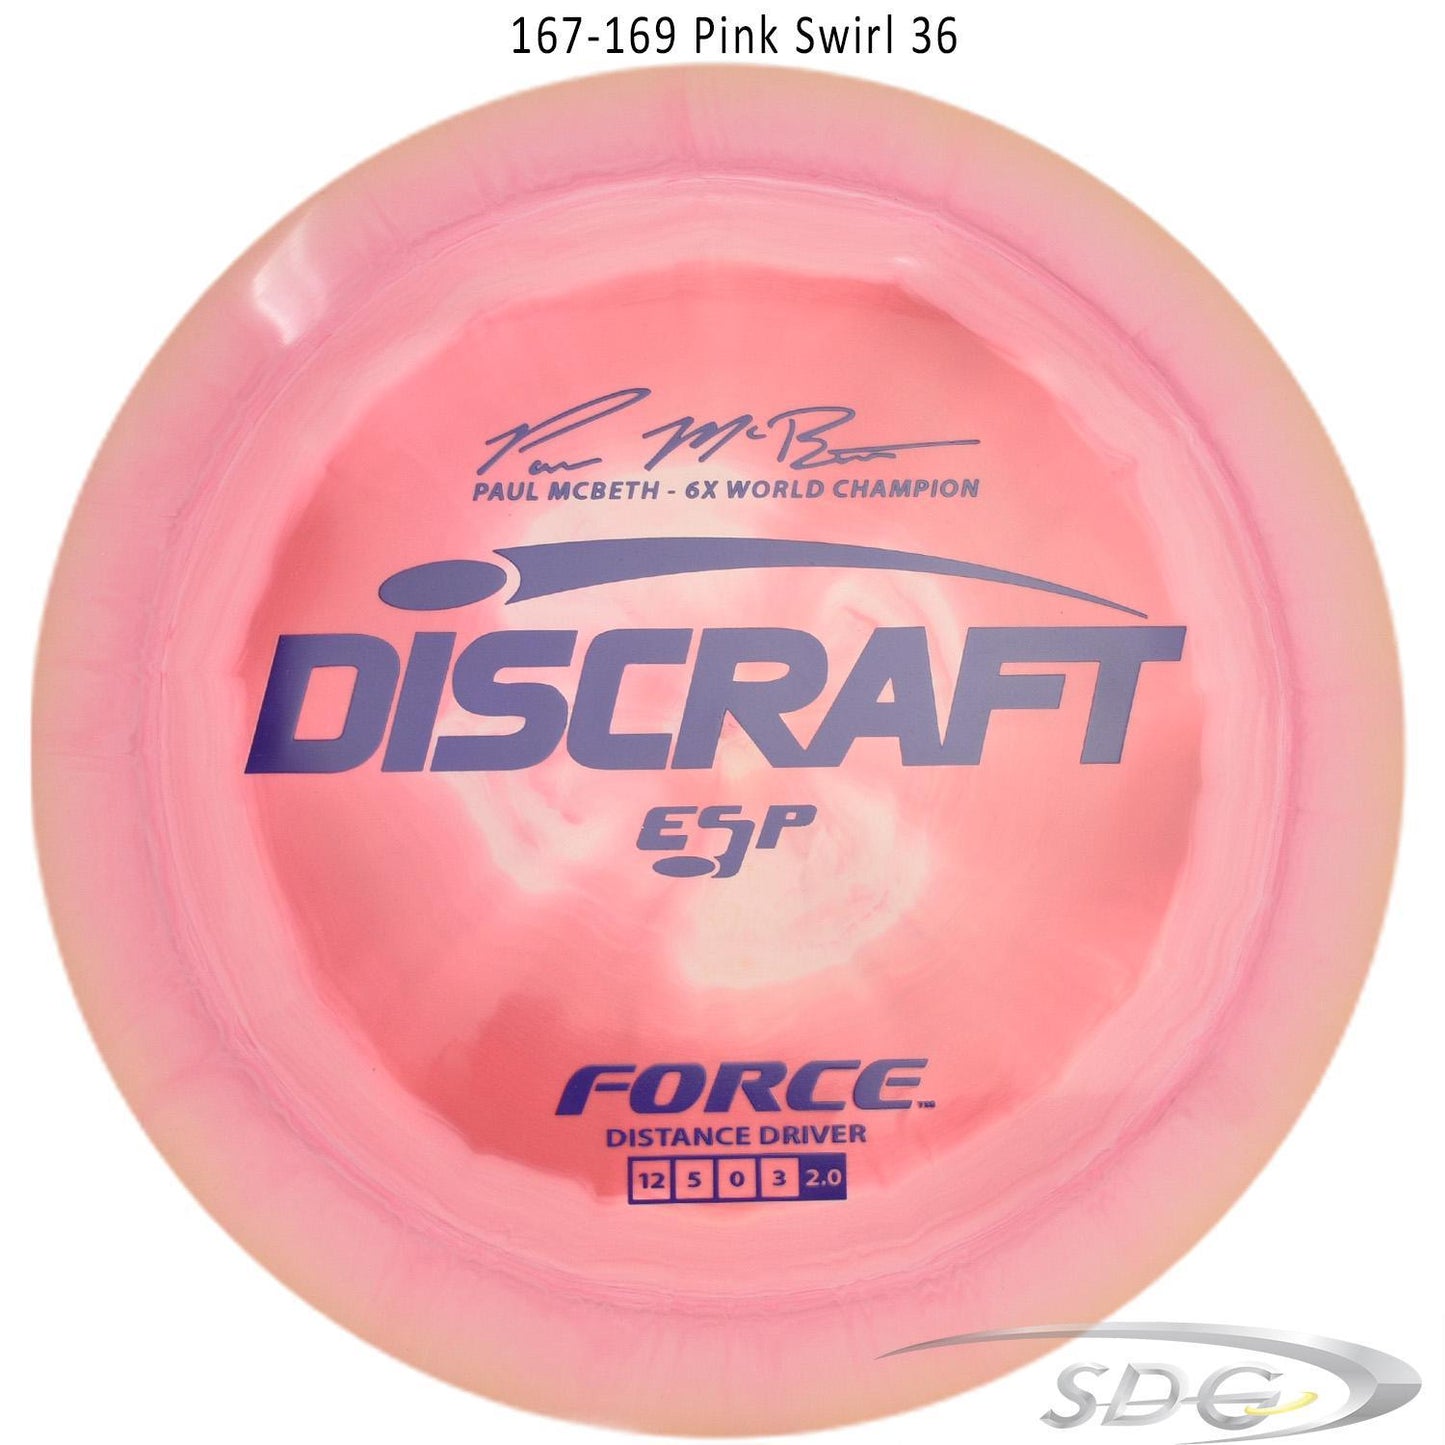 discraft-esp-force-6x-paul-mcbeth-signature-disc-golf-distance-driver-169-160-weights 167-169 Pink Swirl 36 